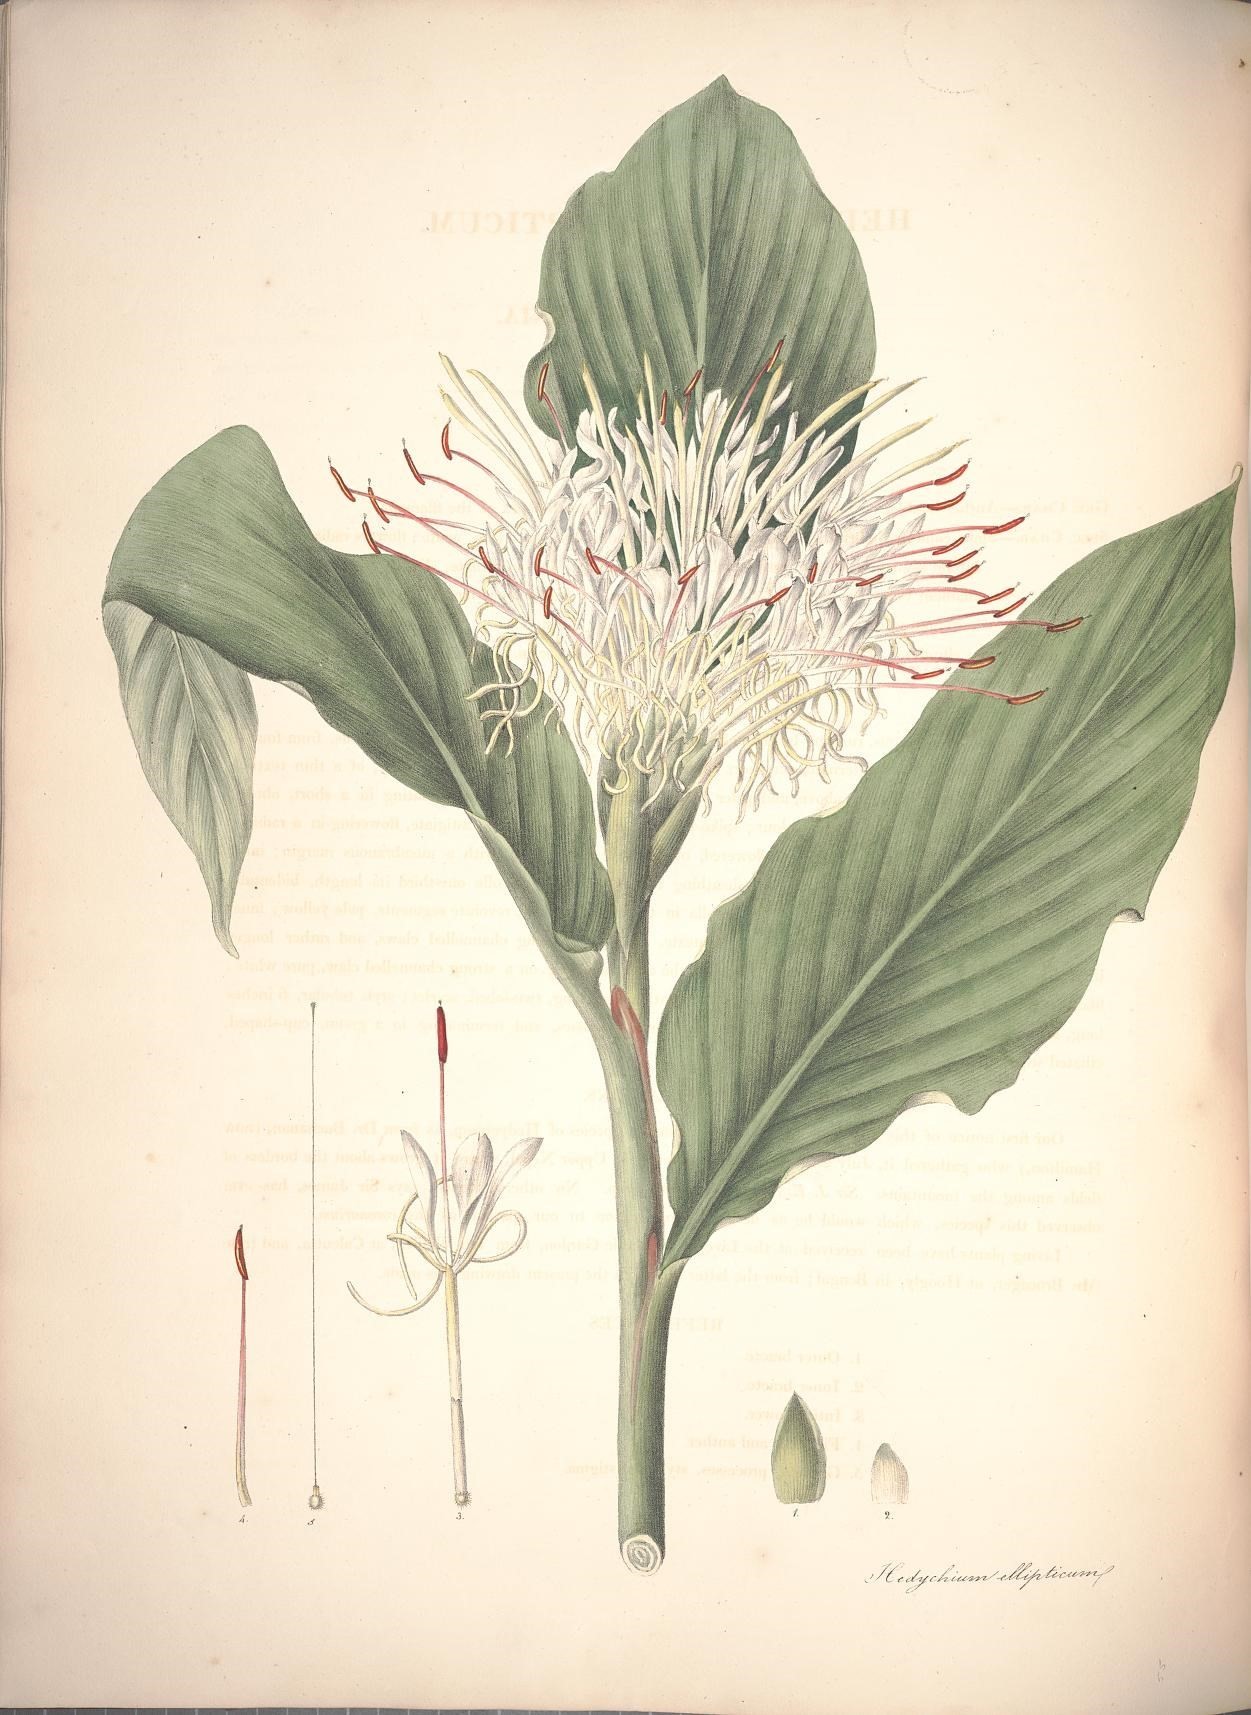 Plancia ëd Hedychium ellipticum Buch.-Ham. ex Sm.